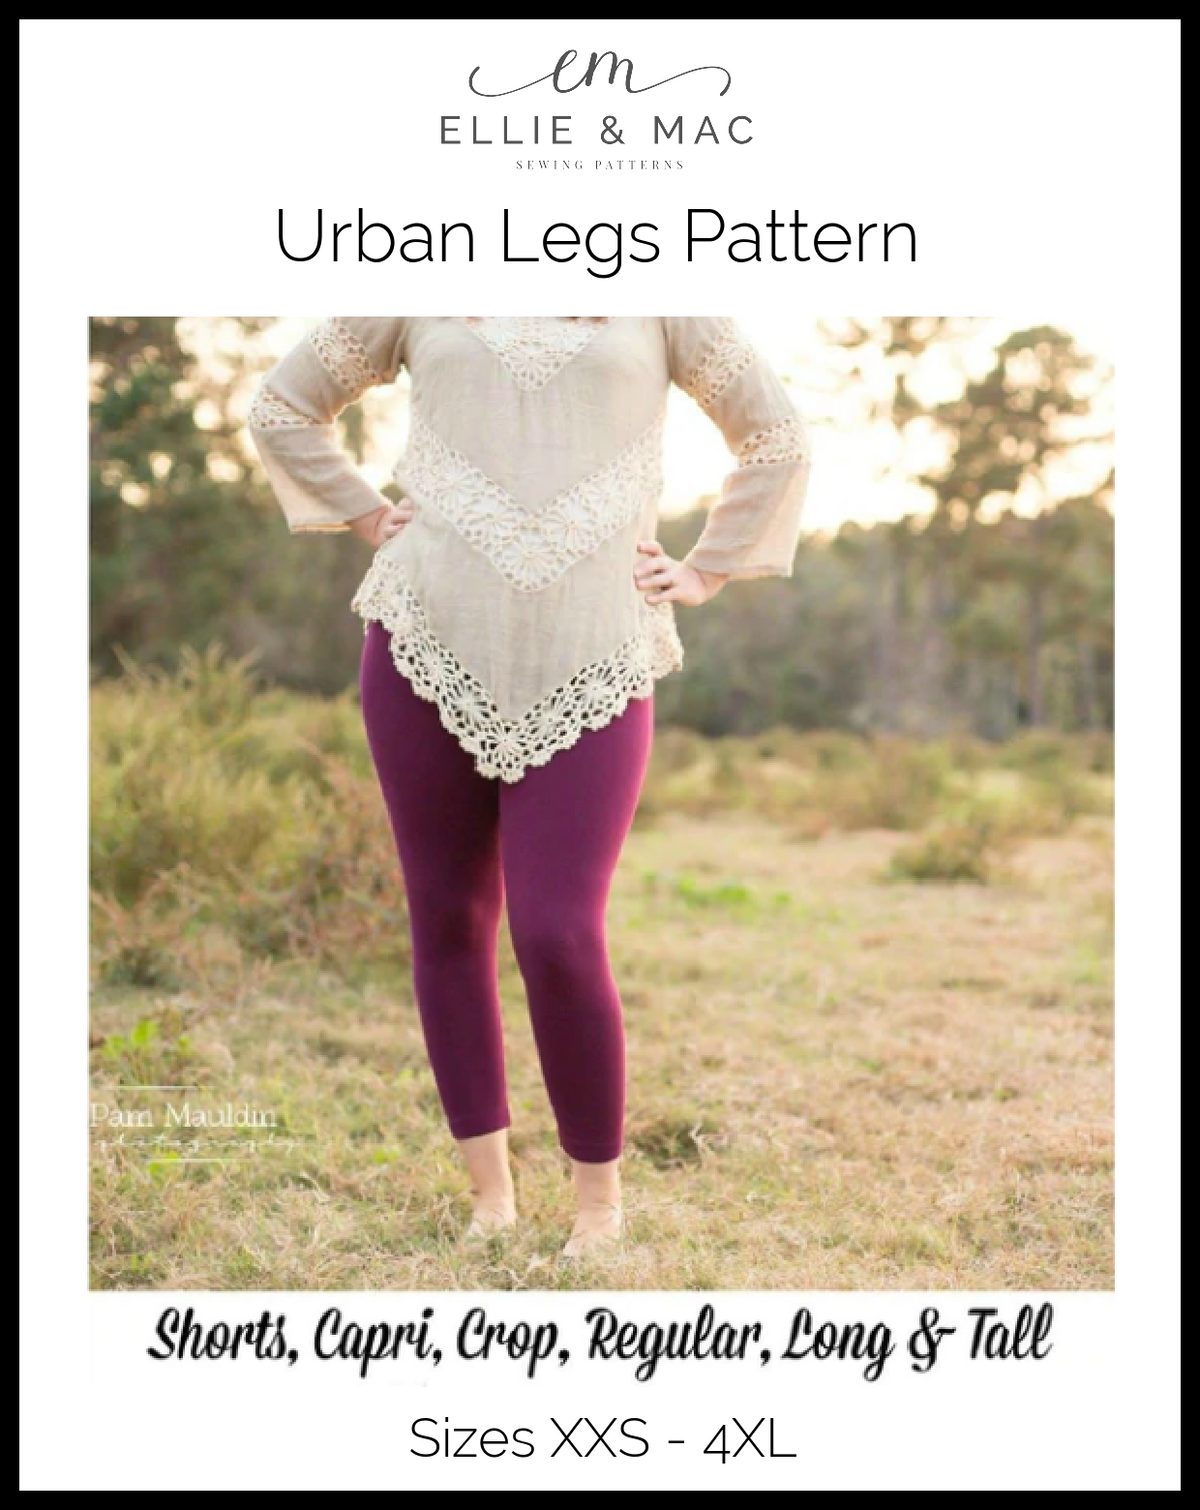 Urban Legs Shorts & Legging Pattern